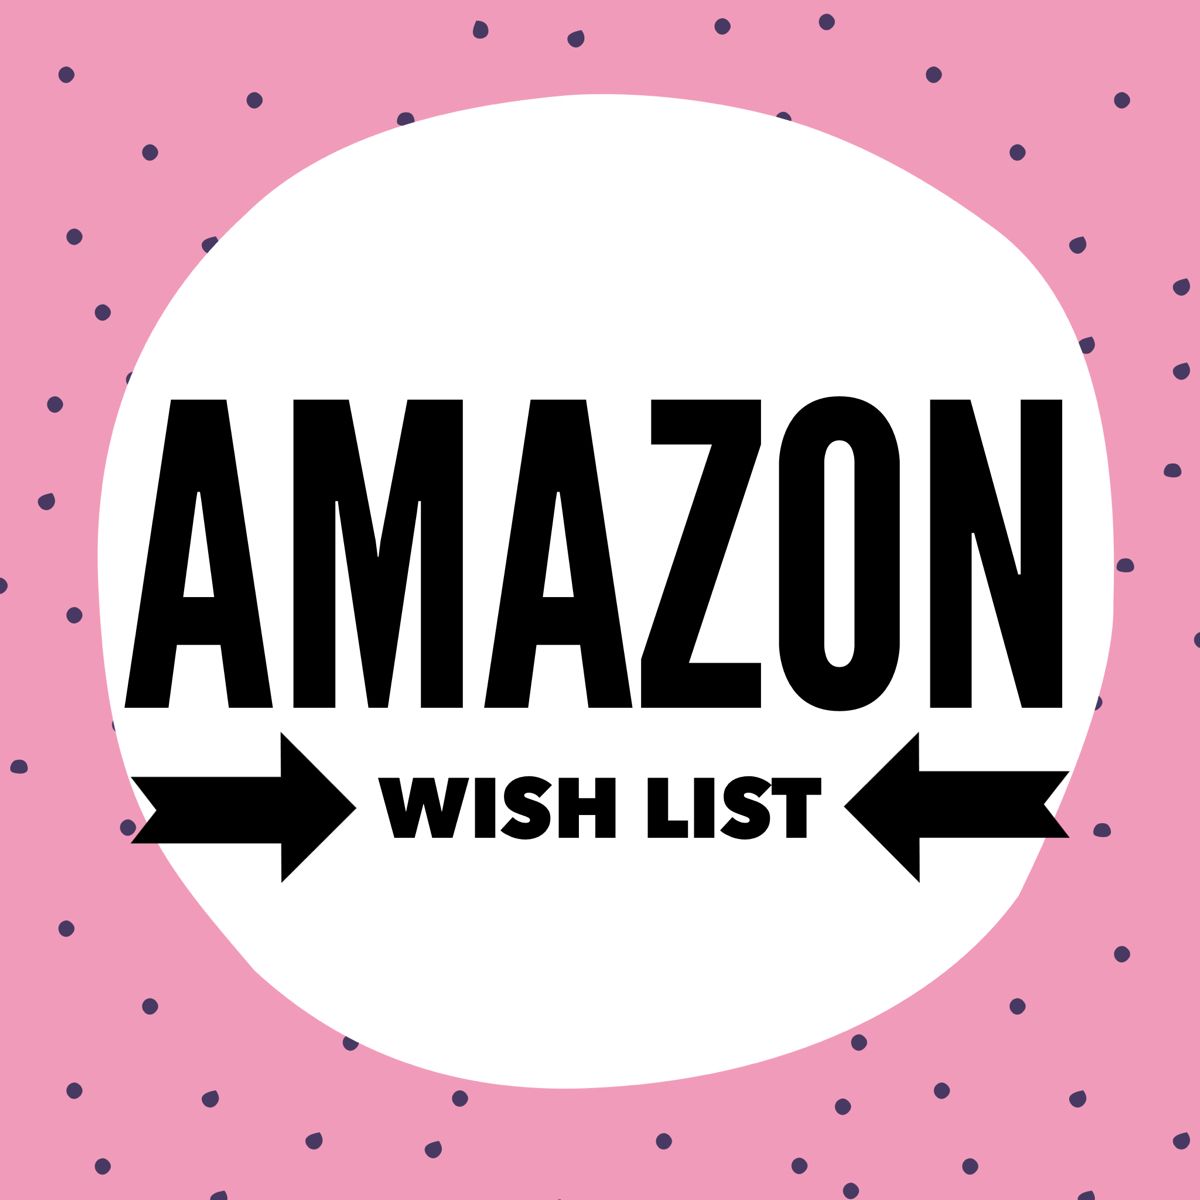 l1zerboy Amazon Wish List image: 1